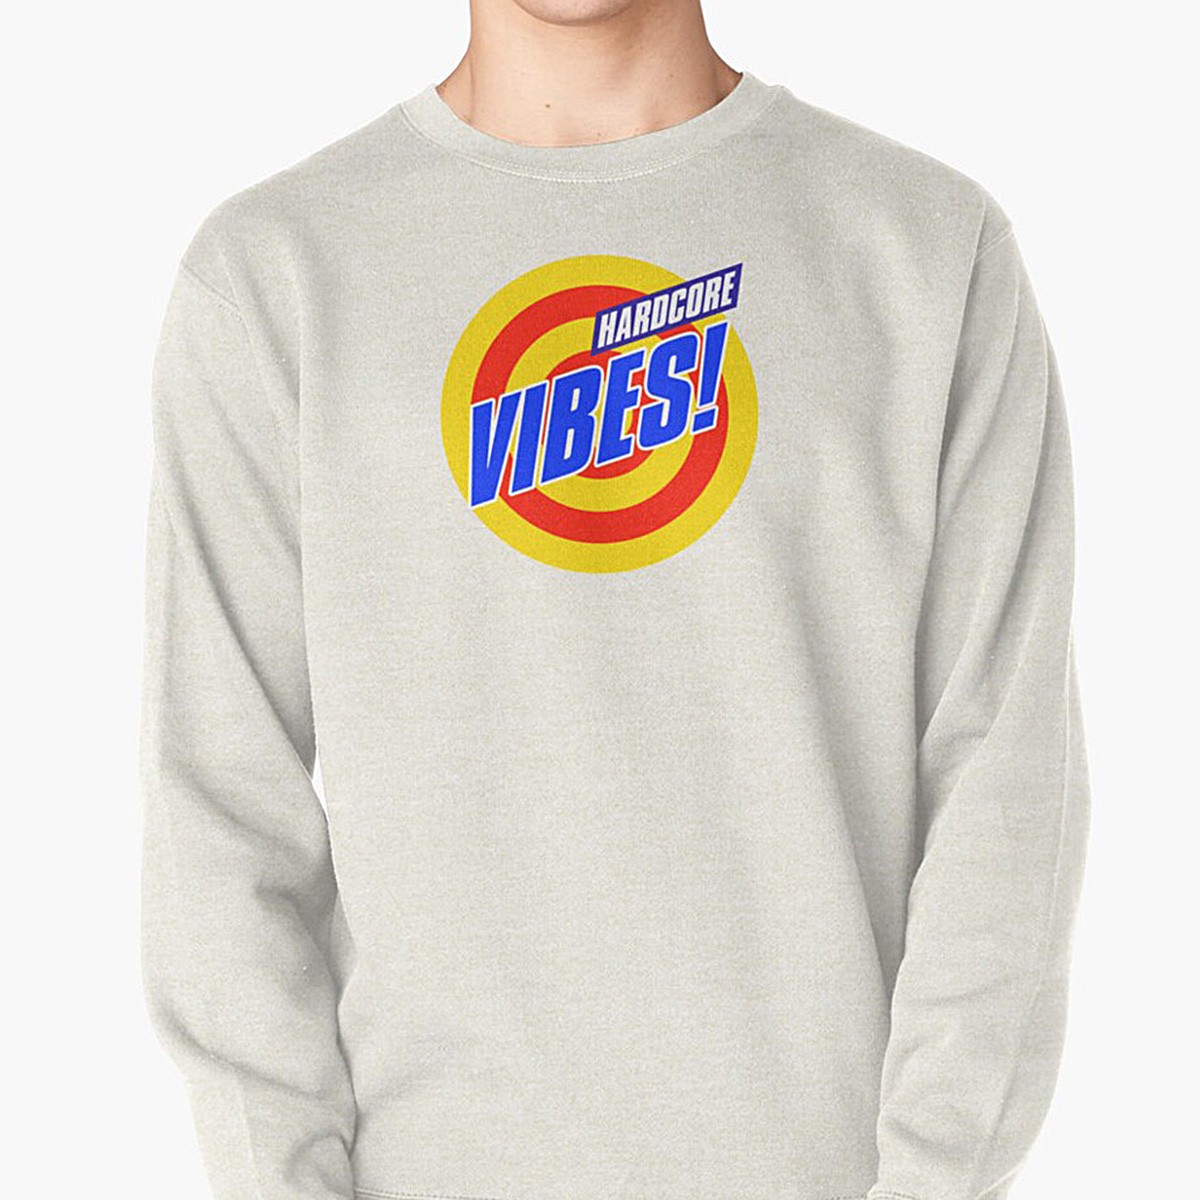 Hardcore Vibes! Old School Rave Design Pullover Sweatshirt by NTK Apparel